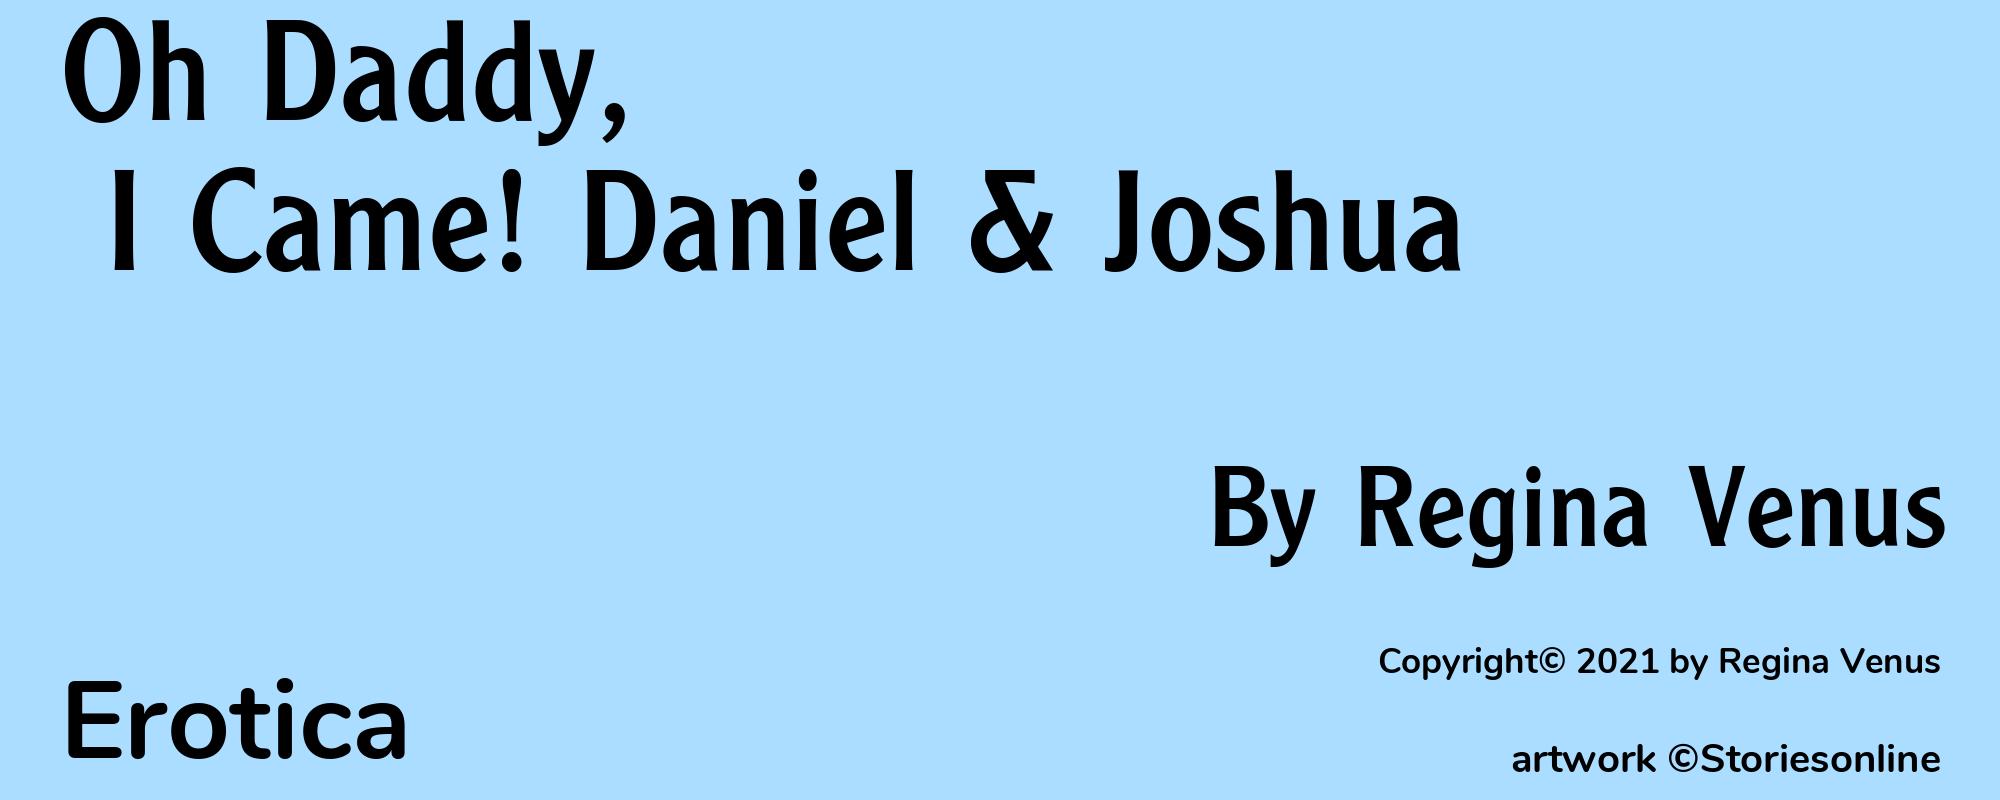 Oh Daddy, I Came! Daniel & Joshua - Cover